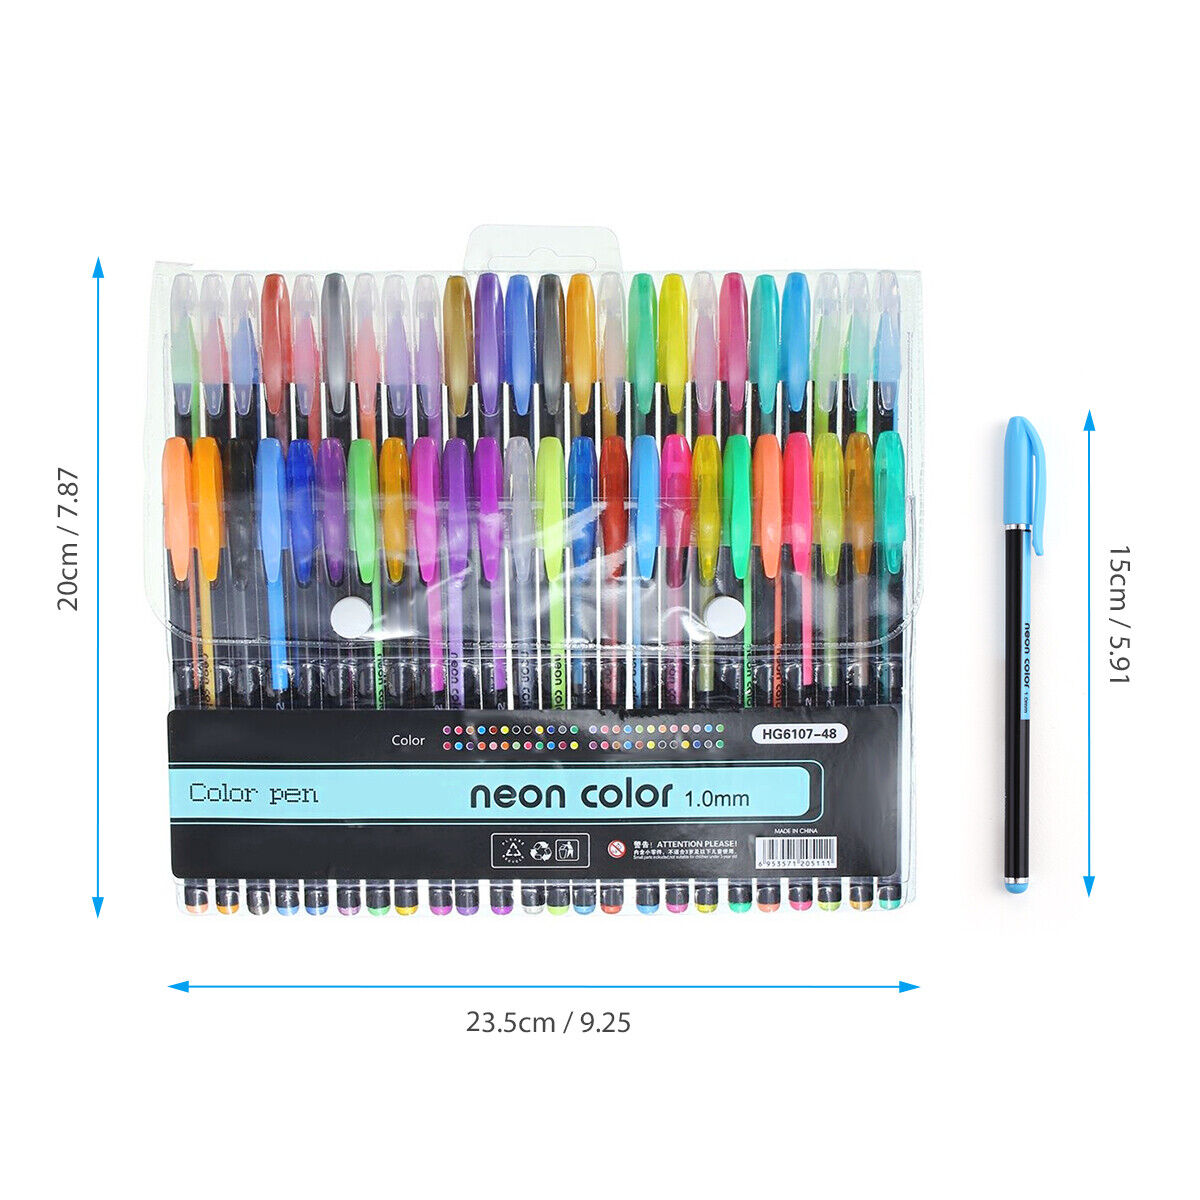 48 Unique Colors (No Duplicates) Gel Pens Gel Pen Set for Adult Coloring Book US Unbranded Does Not Apply - фотография #2